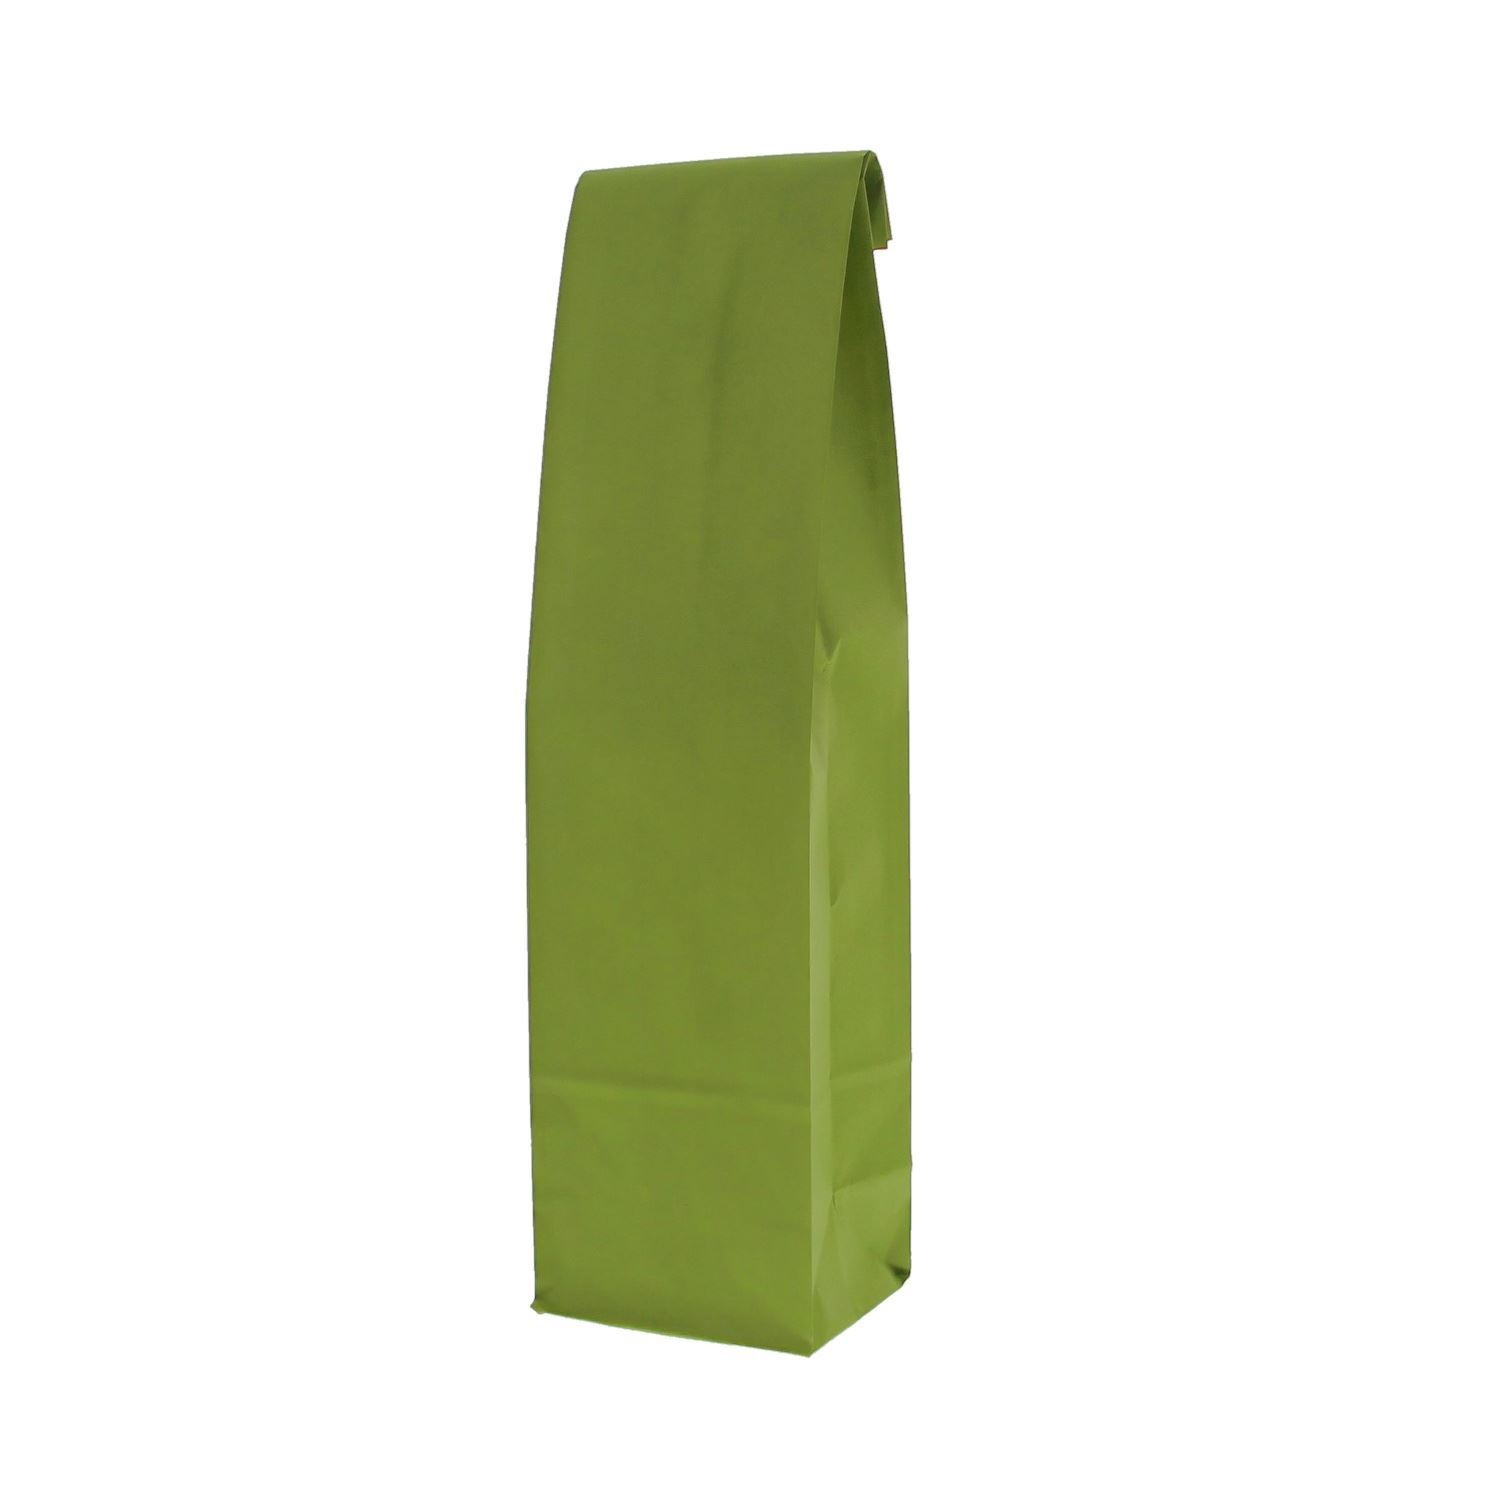 Paper bottle bag with bottom green -100*80*410mm - 50 pcs